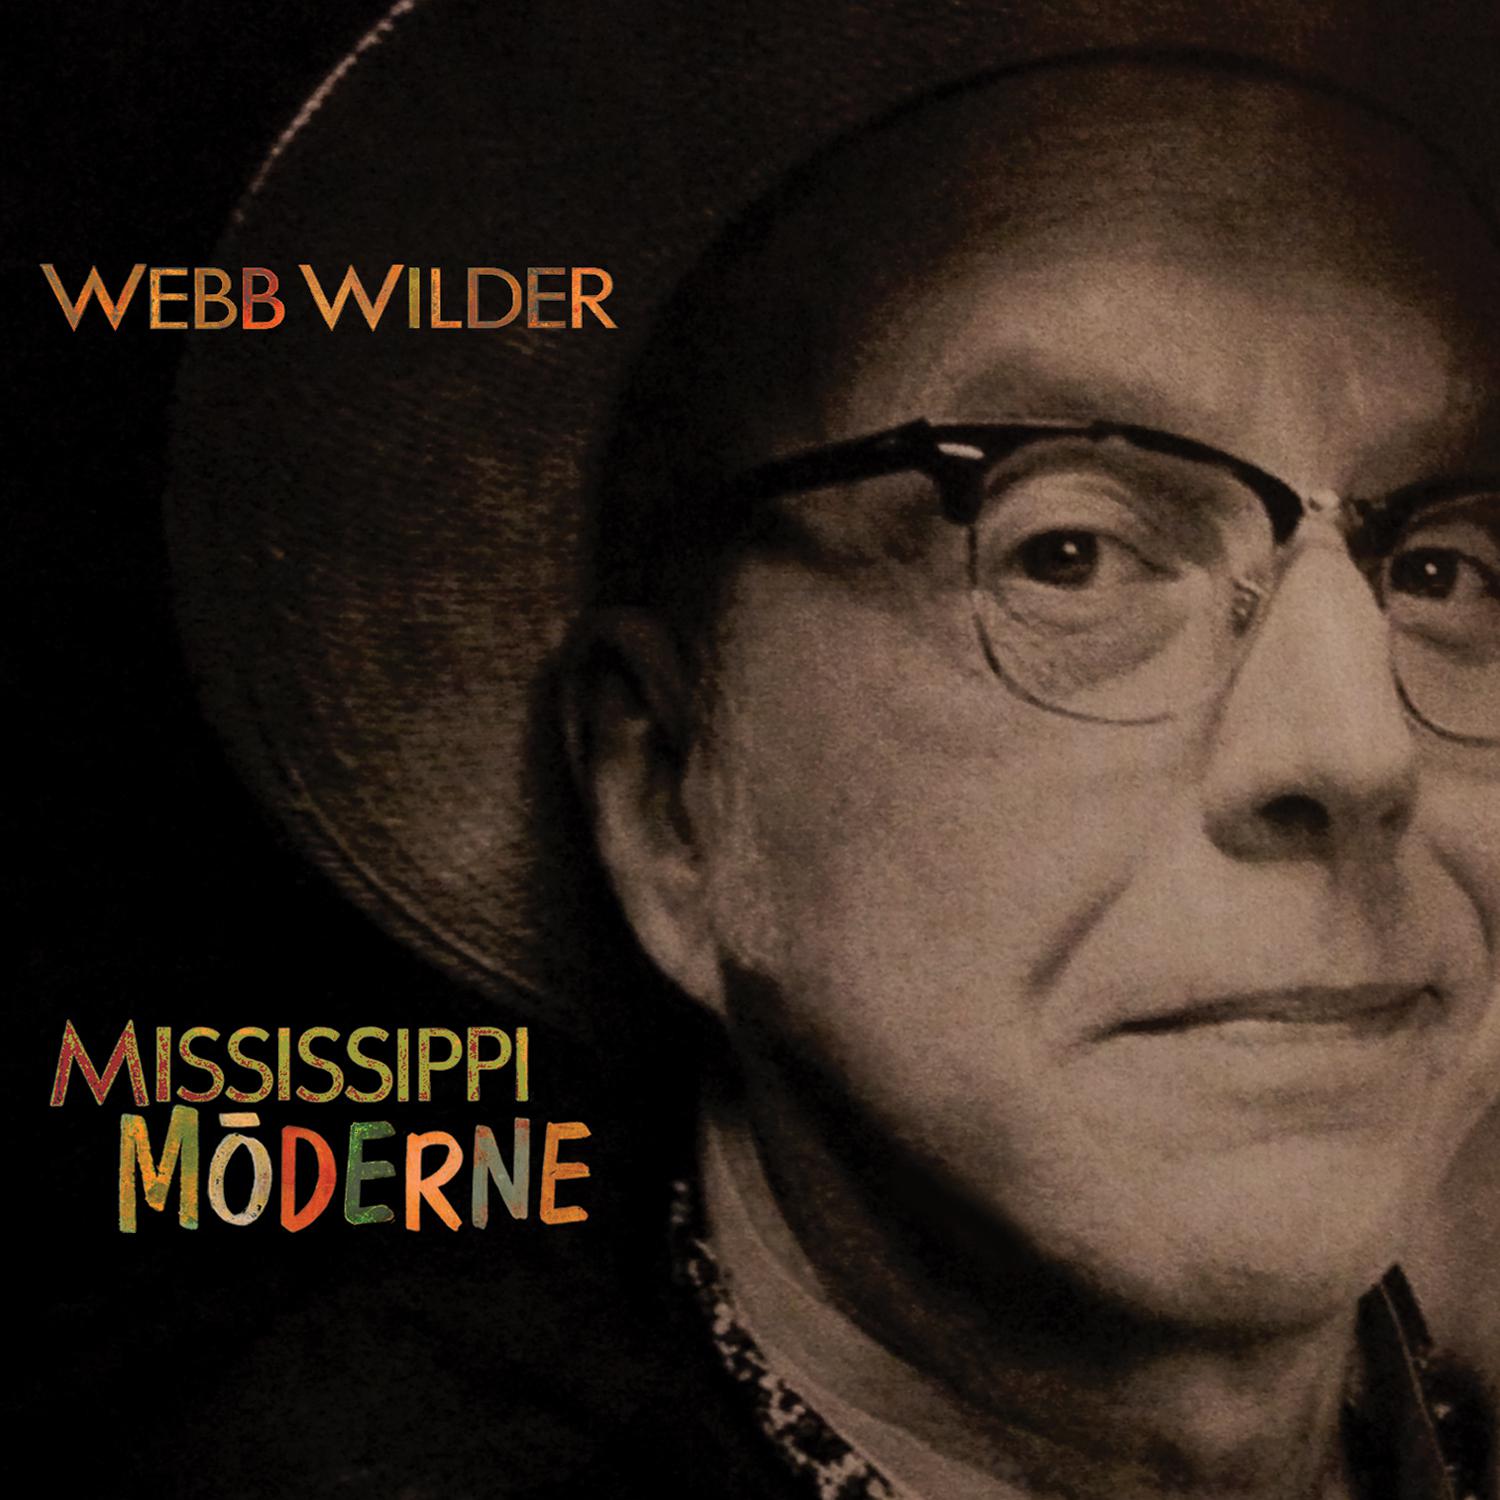 Webb Wilder - Stones In My Pathway (intro)